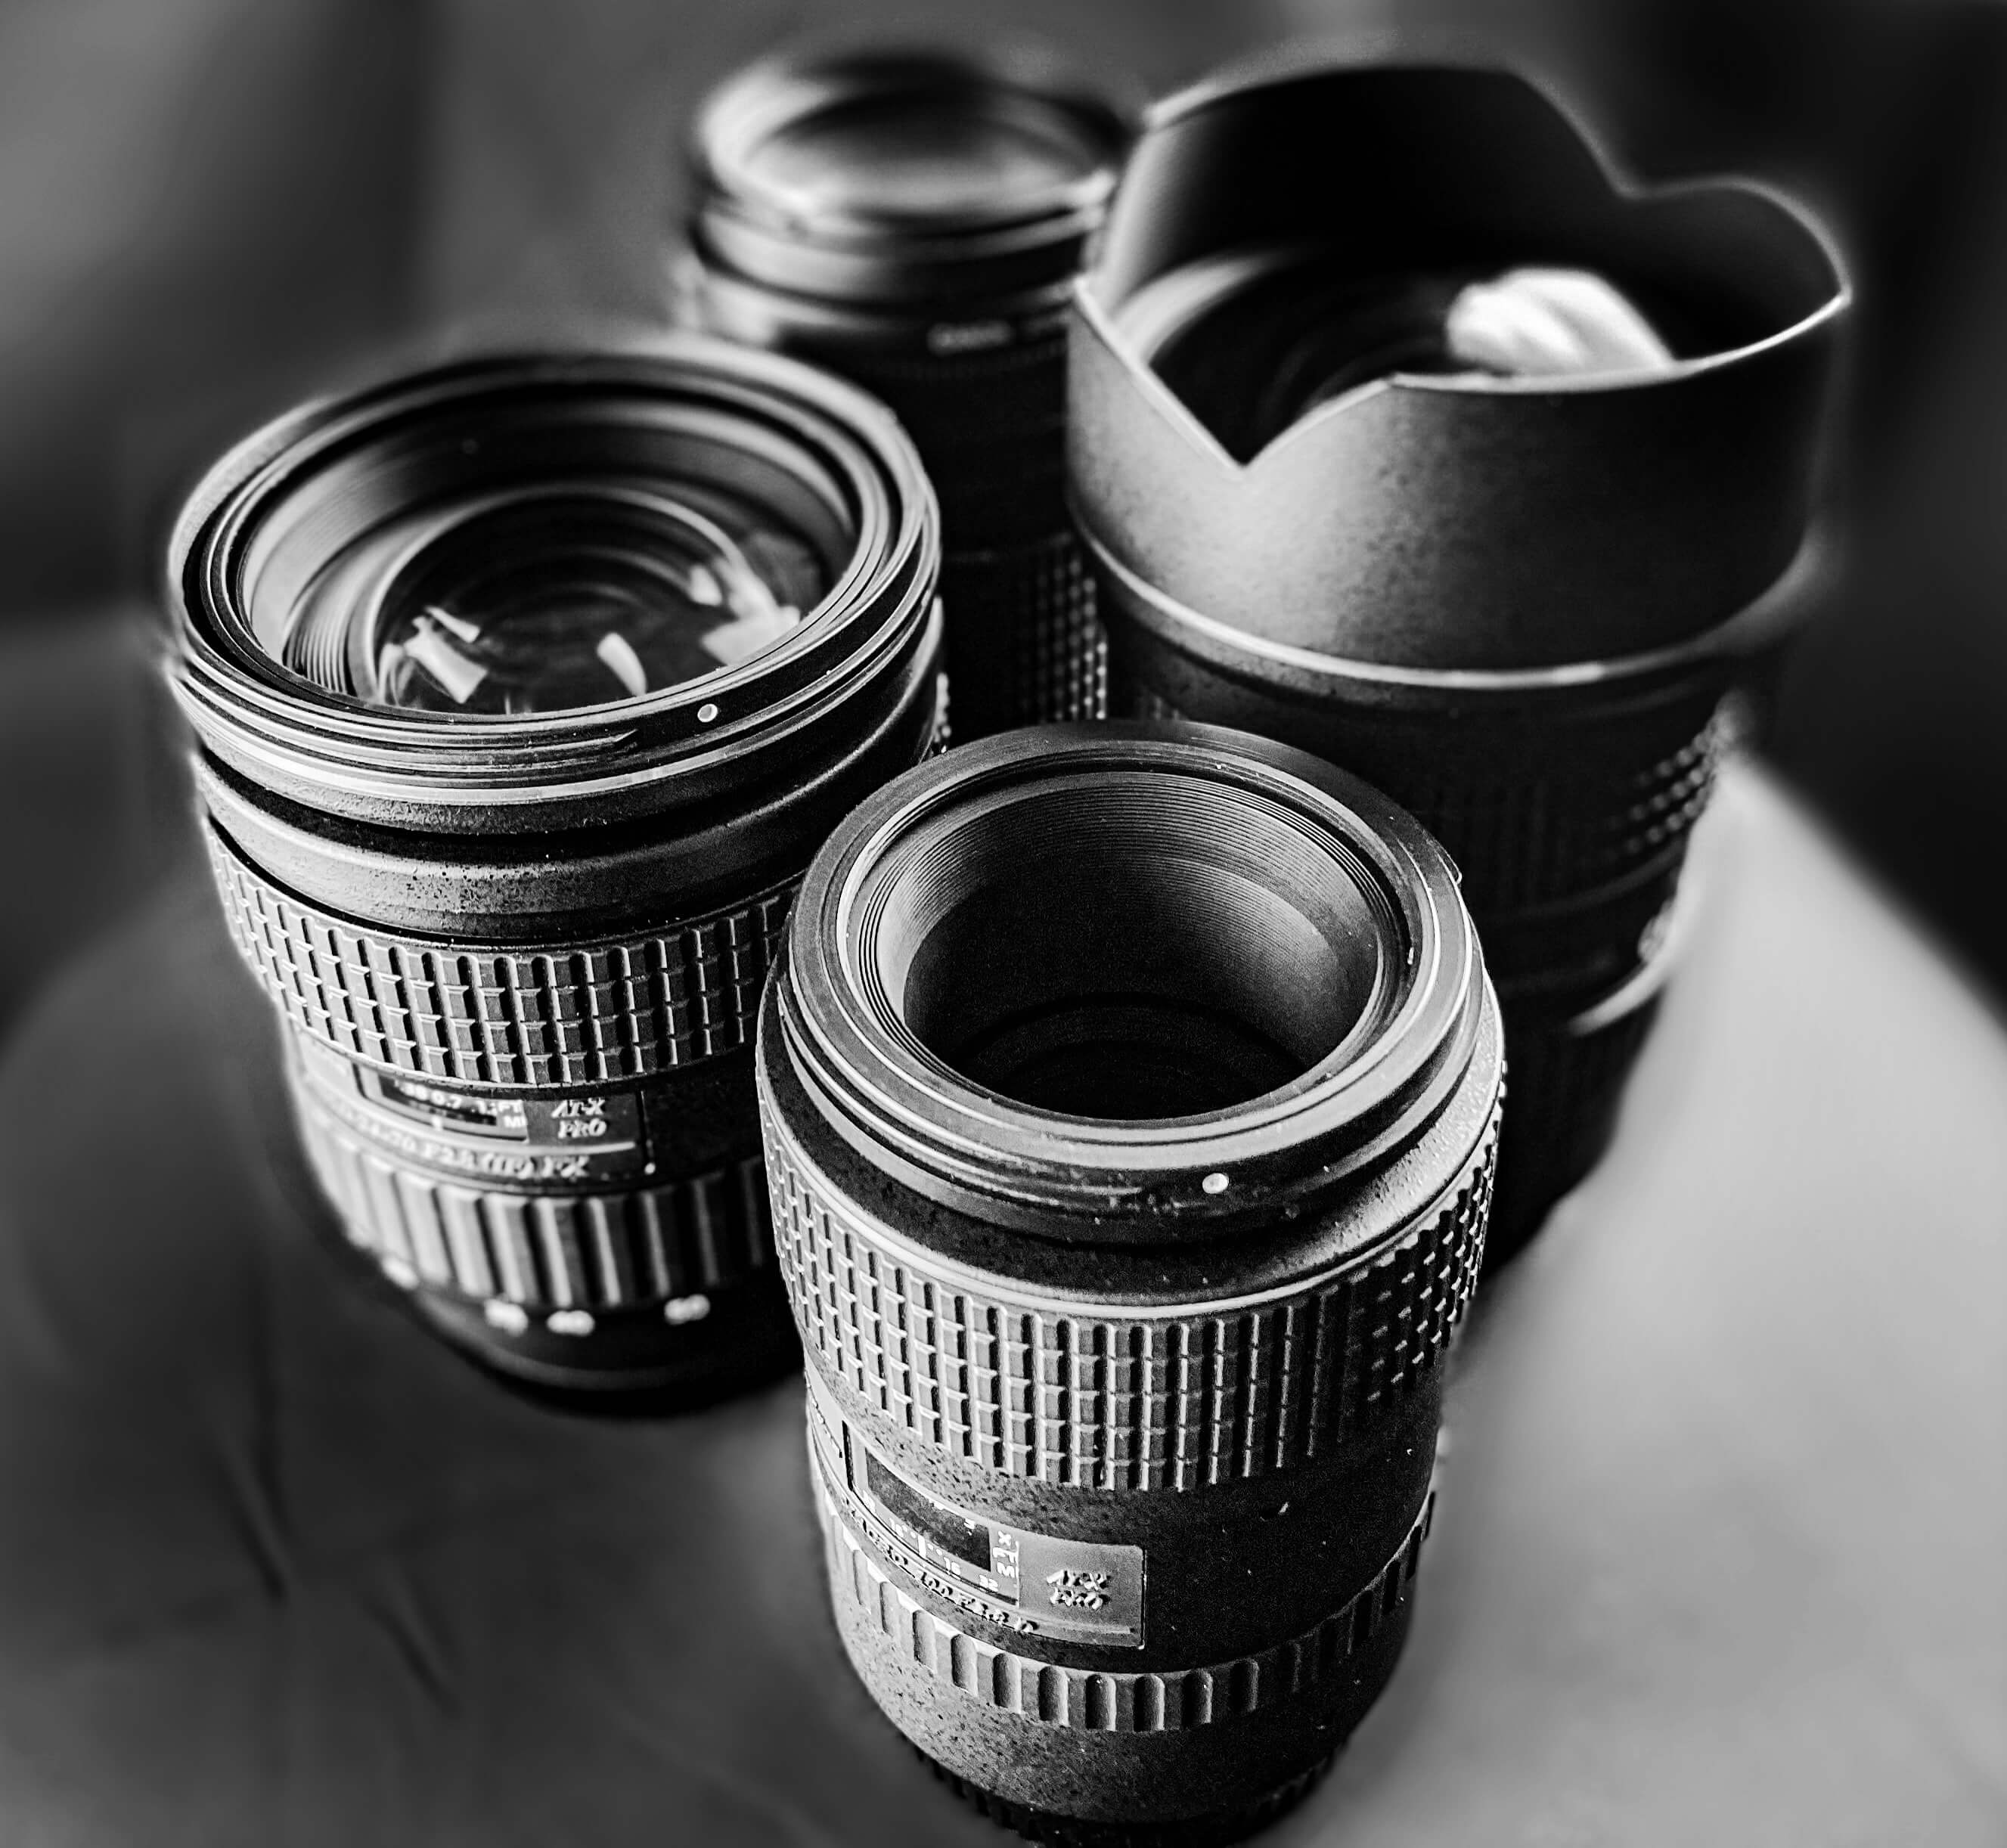 camera lens options, autofocus modes, photography mistakes